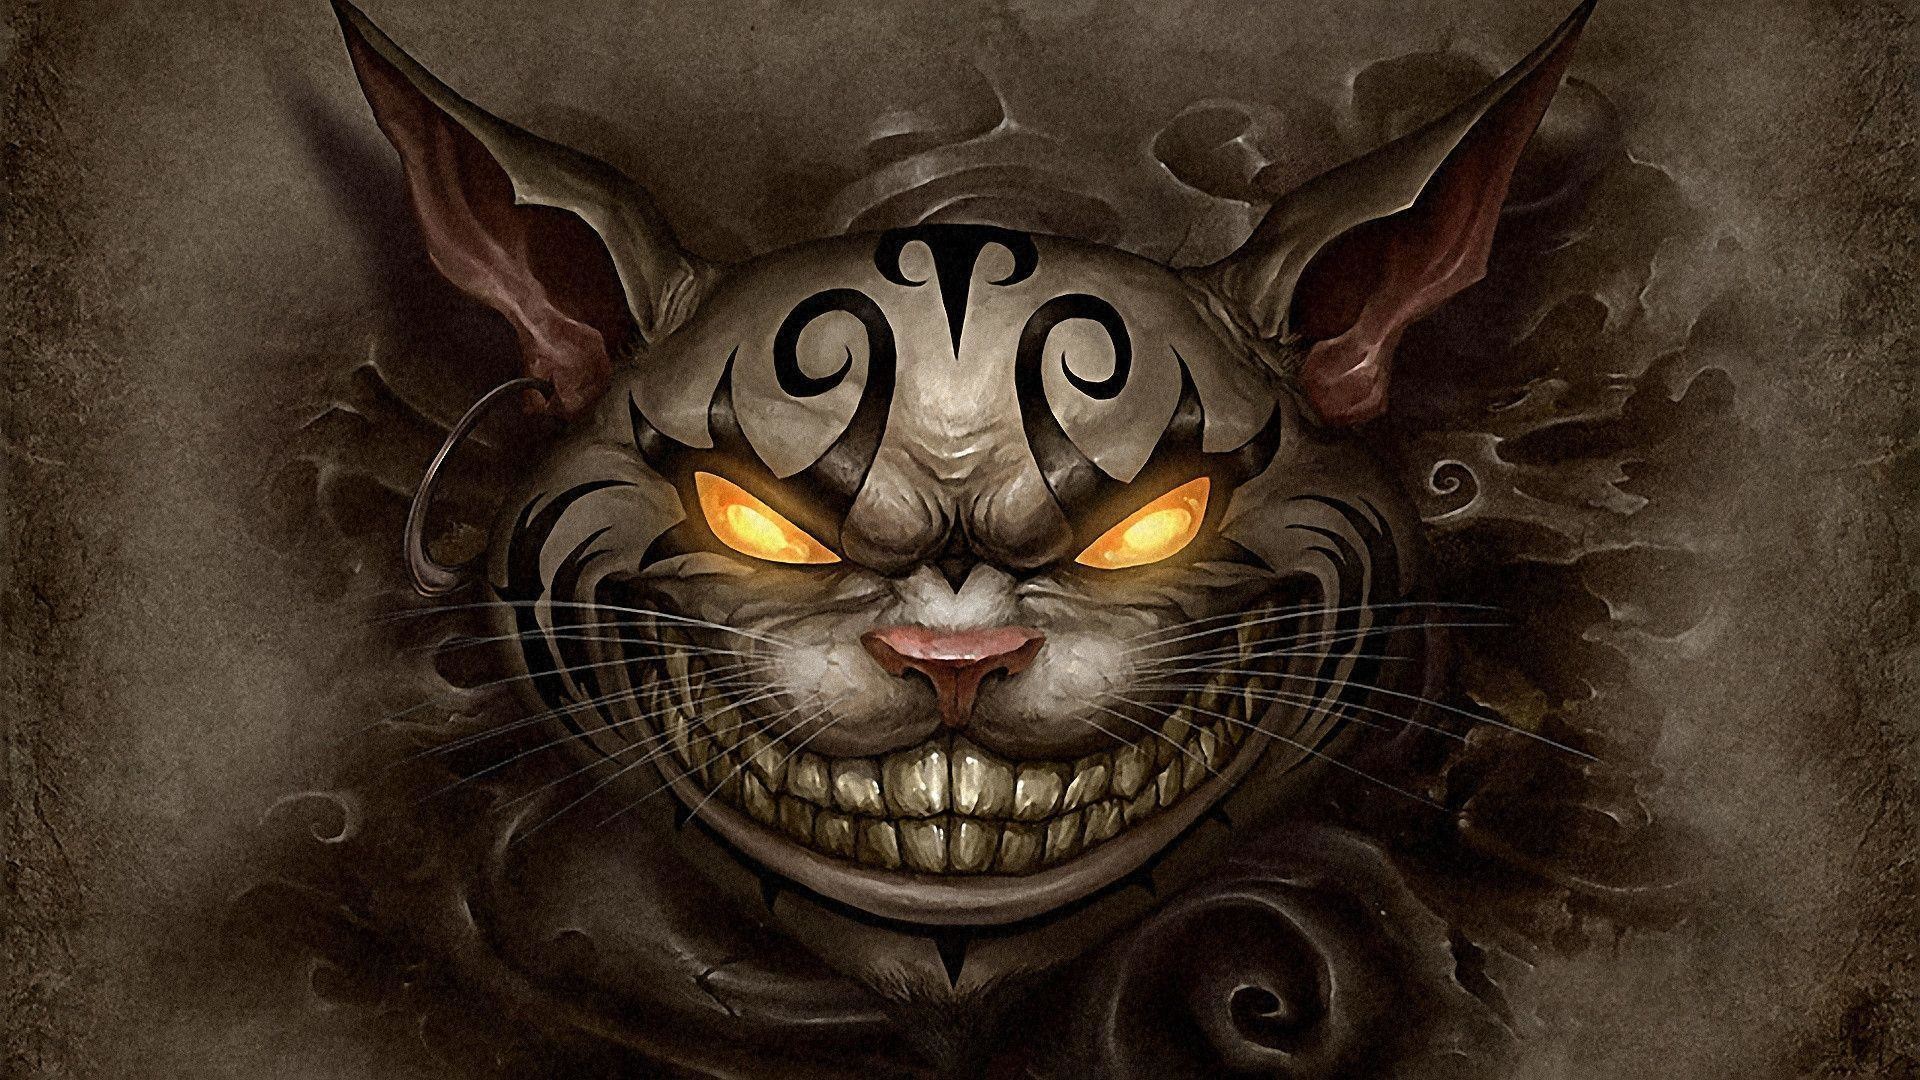 1920x1080 Demonic Cheshire Cat HD Wallpaper | Download HD Wallpaper, High .